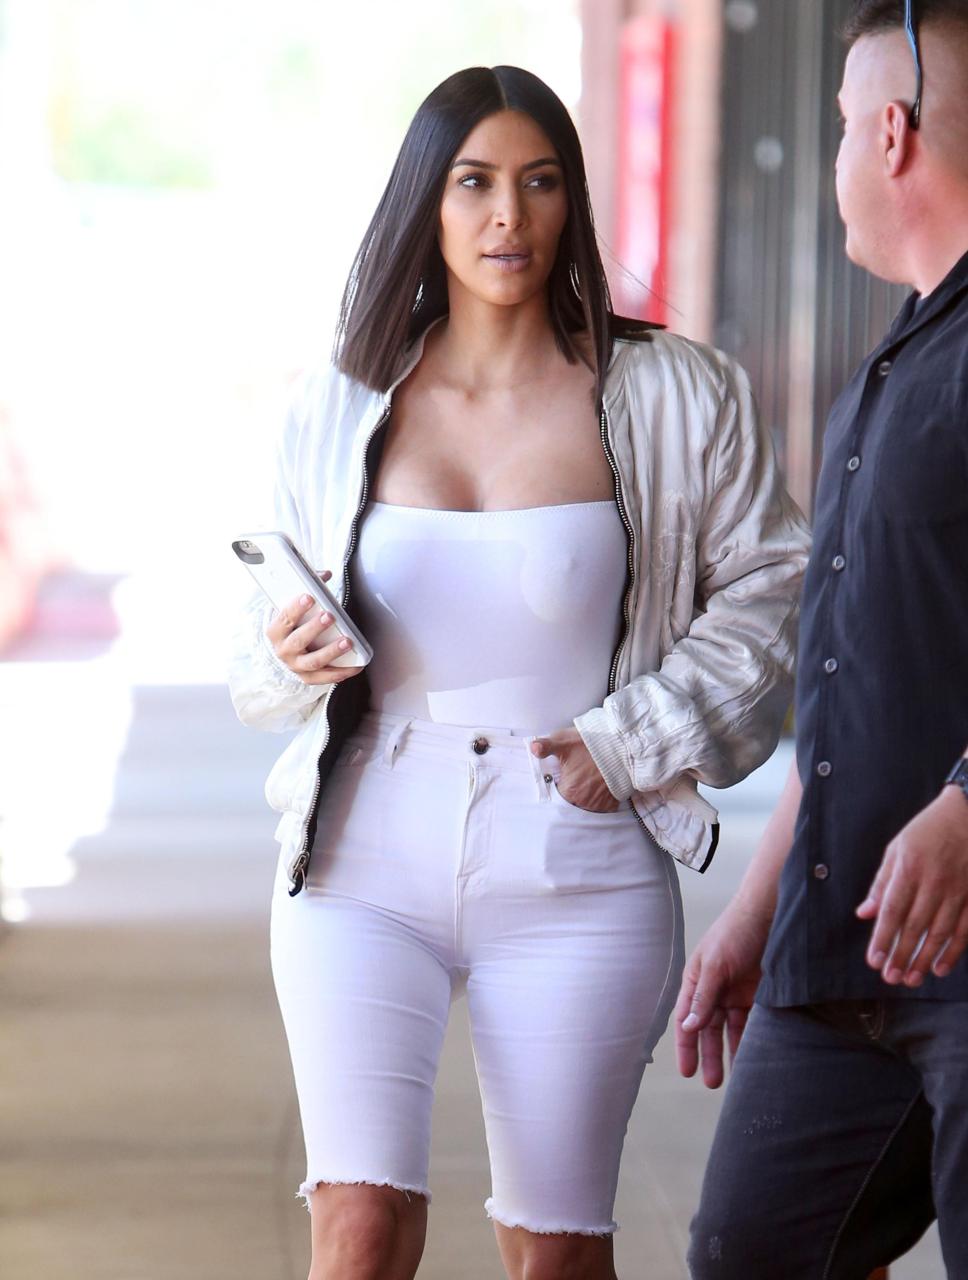  Kim Kardashian went braless in the white vest top